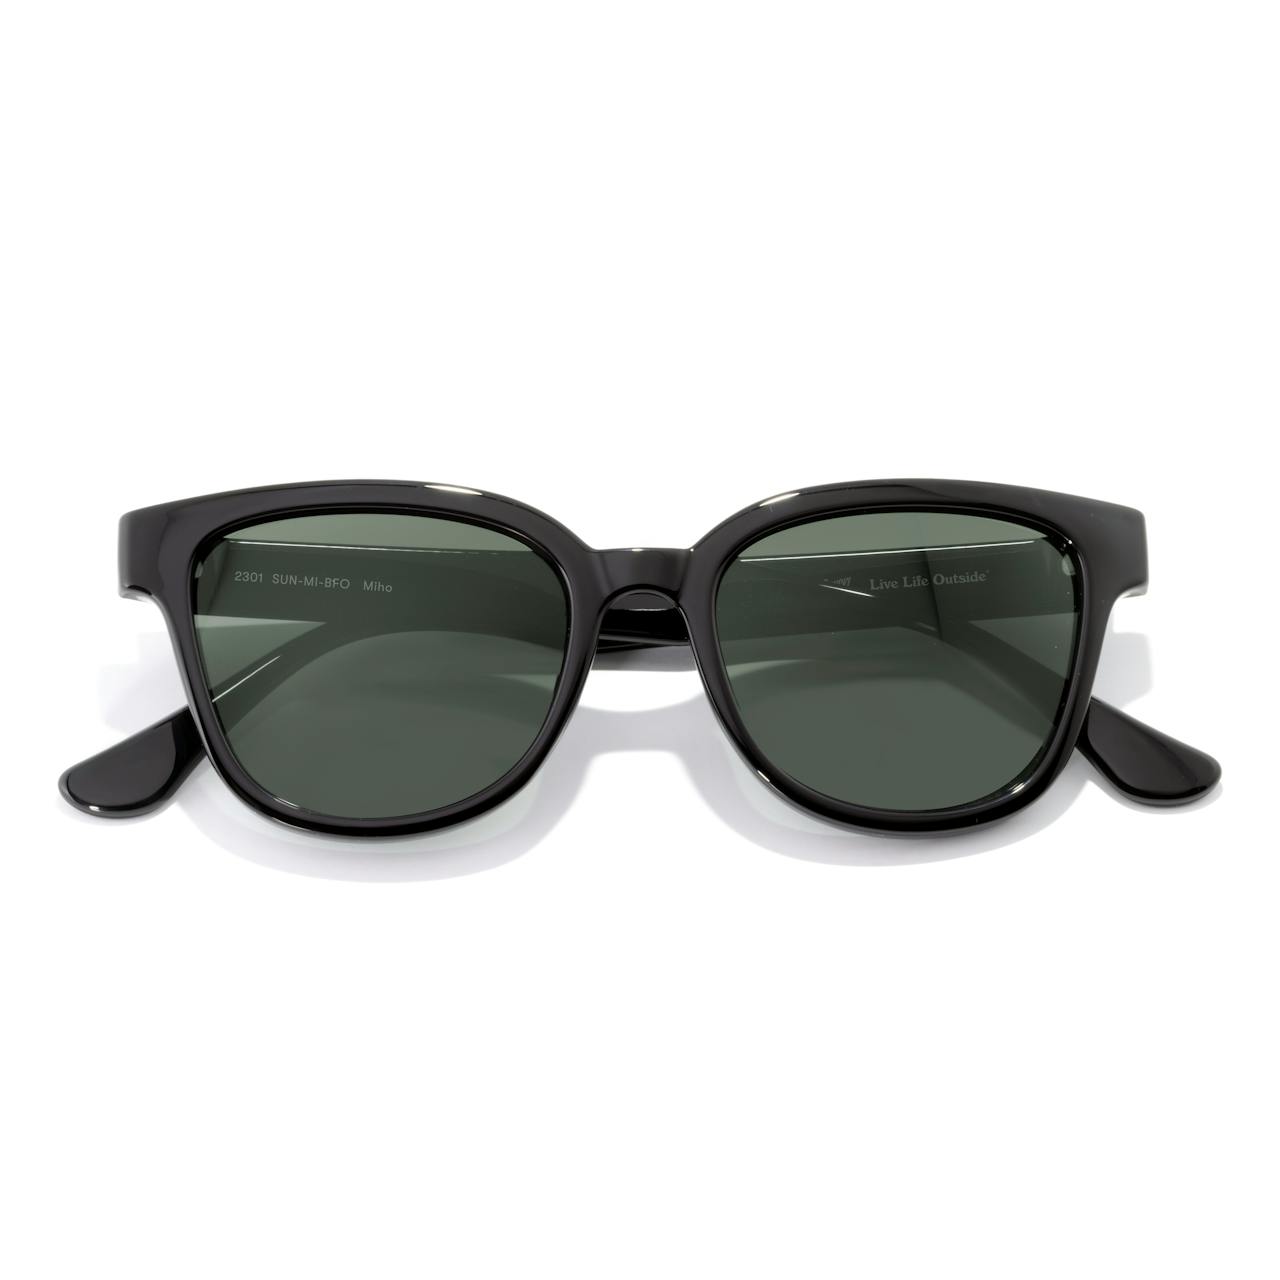 Sunski Miho Sunglasses - Black Forest | Sunglasses | Huckberry